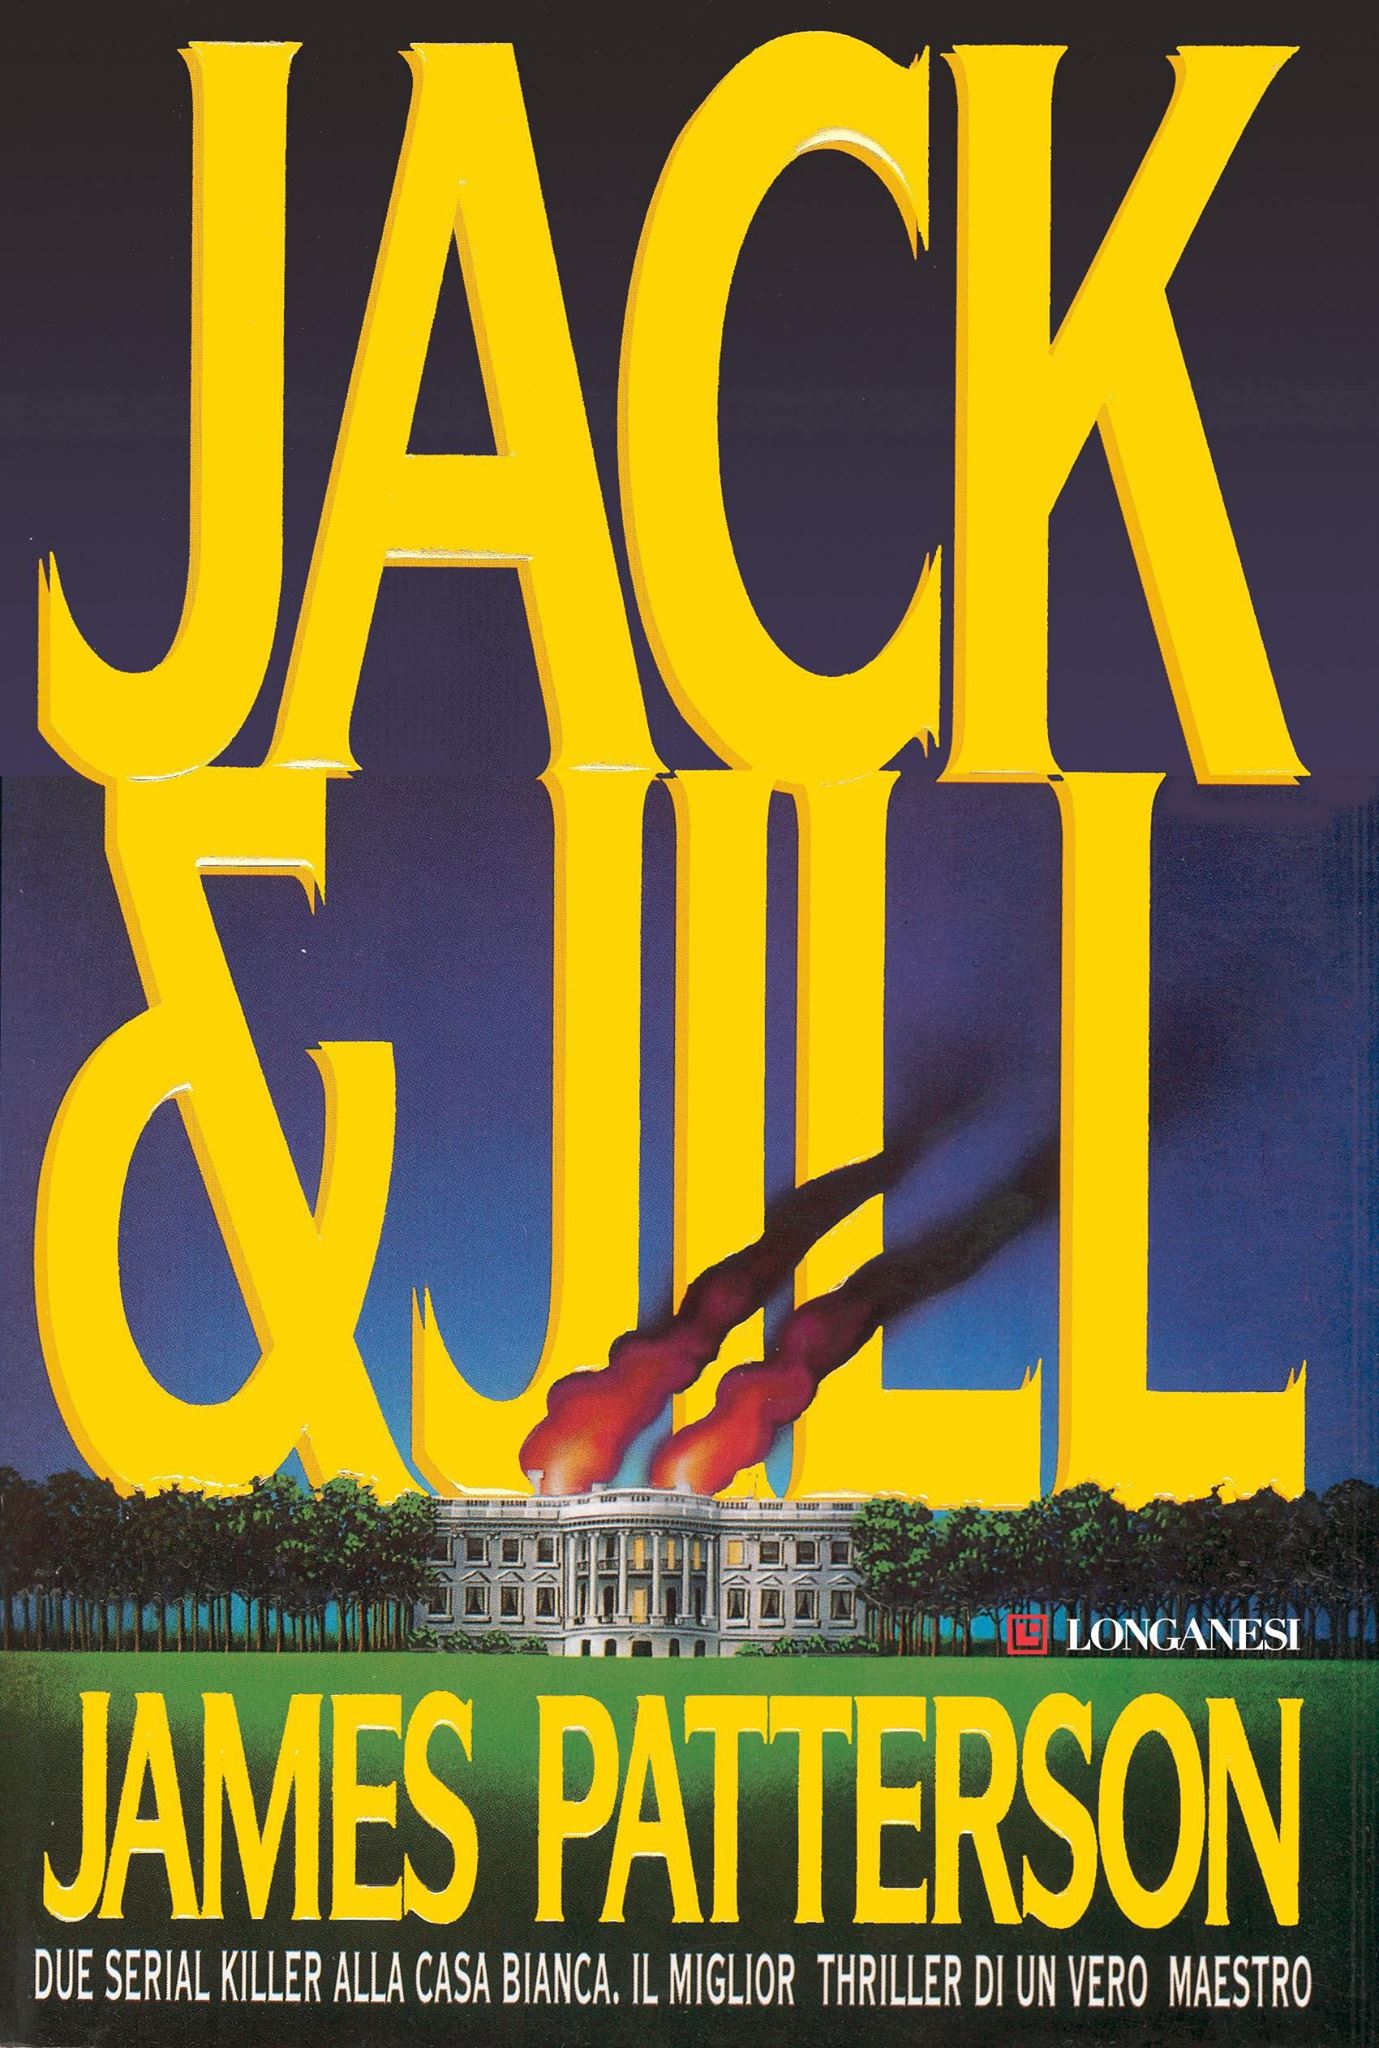 Jack & Jill CliccaLivorno